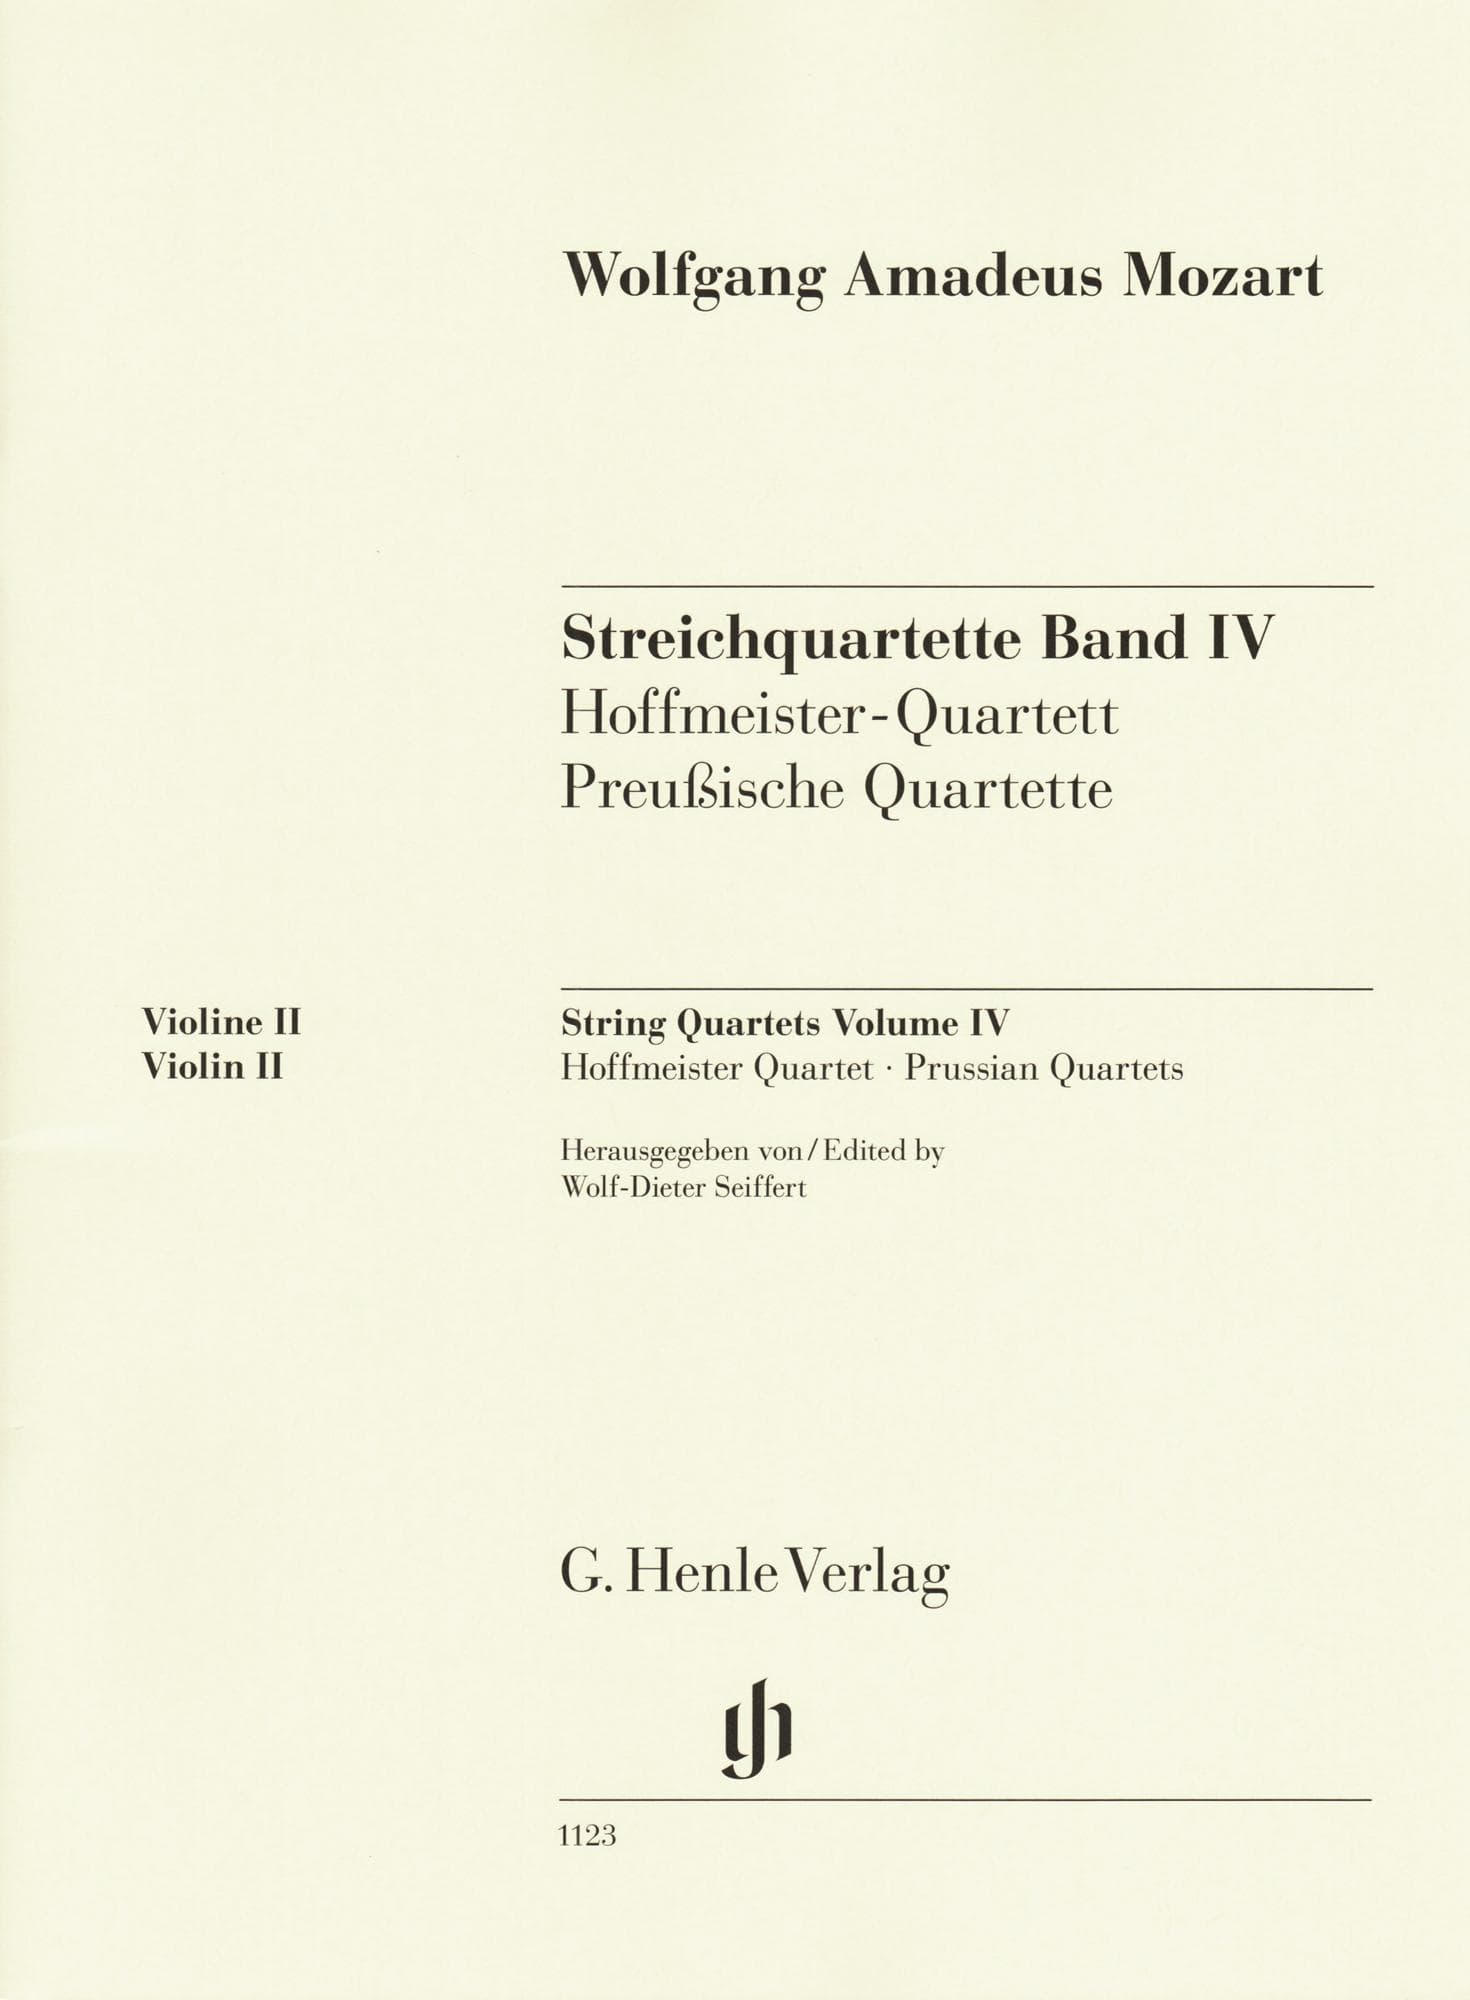 Mozart, W.A. - String Quartets, Volume IV: The Hoffmeister and Prussian Quartets - for String Quartet - G. Henle Verlag URTEXT